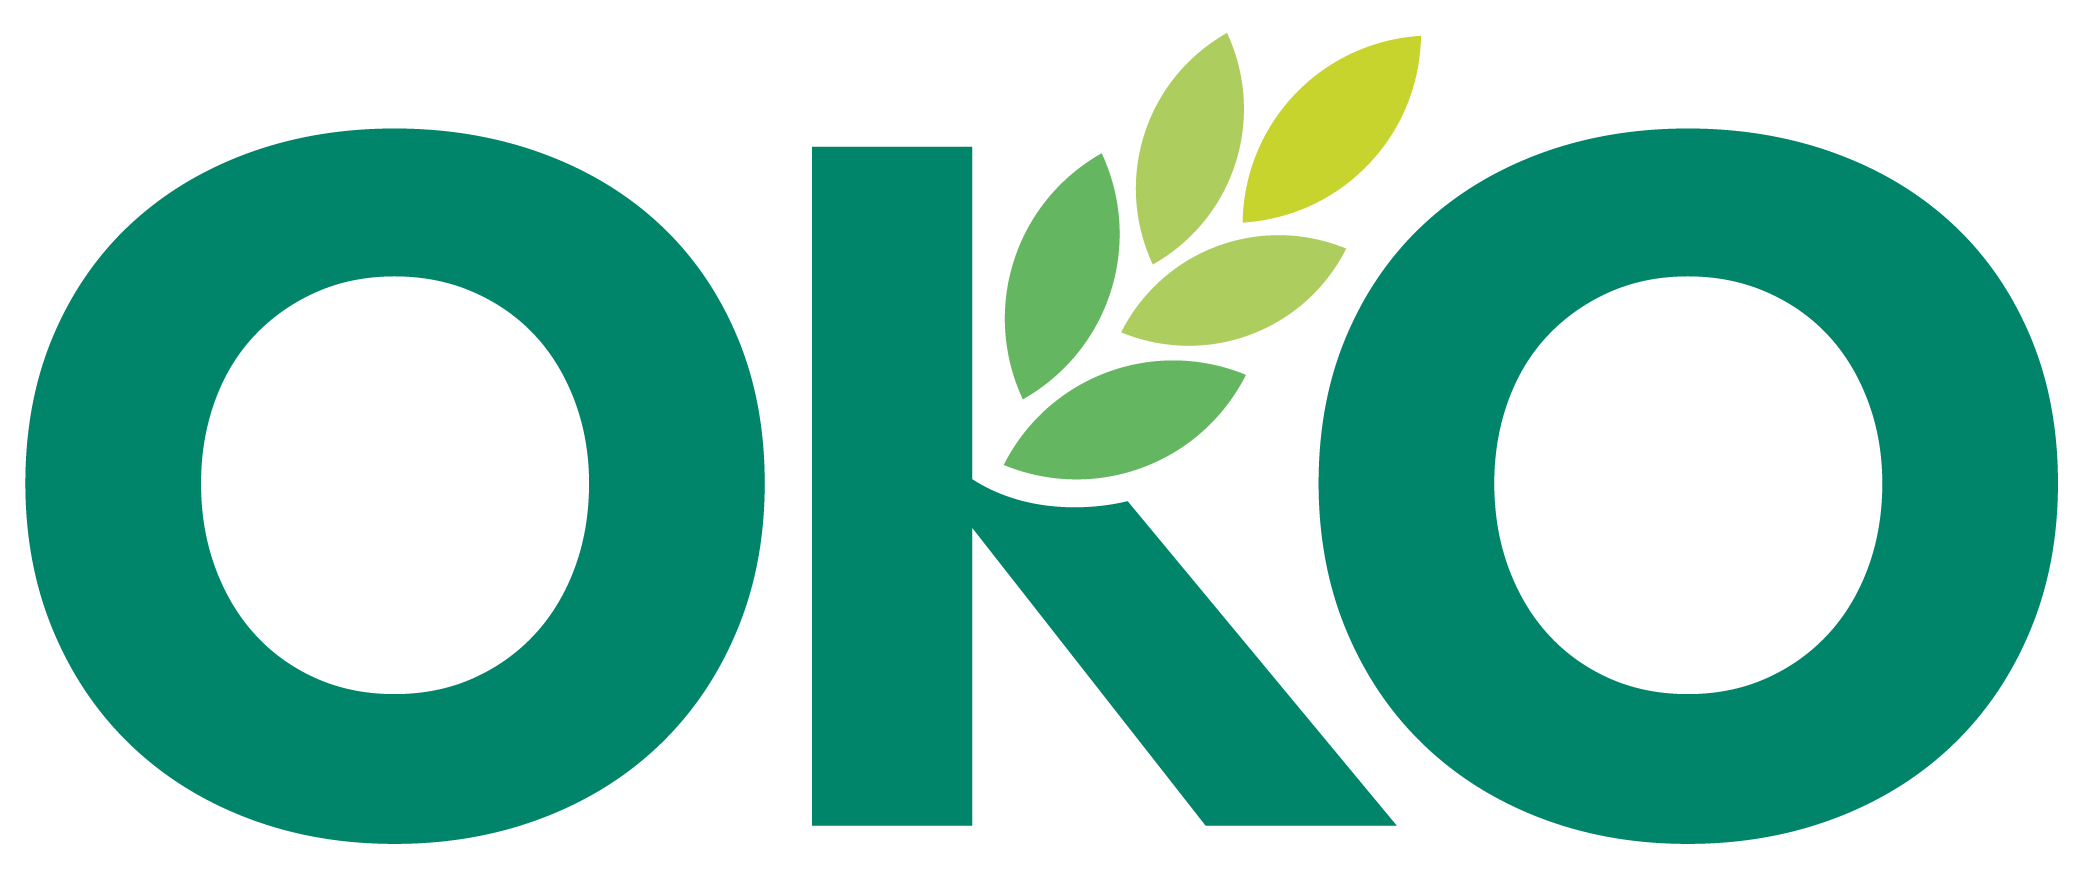 oko logo